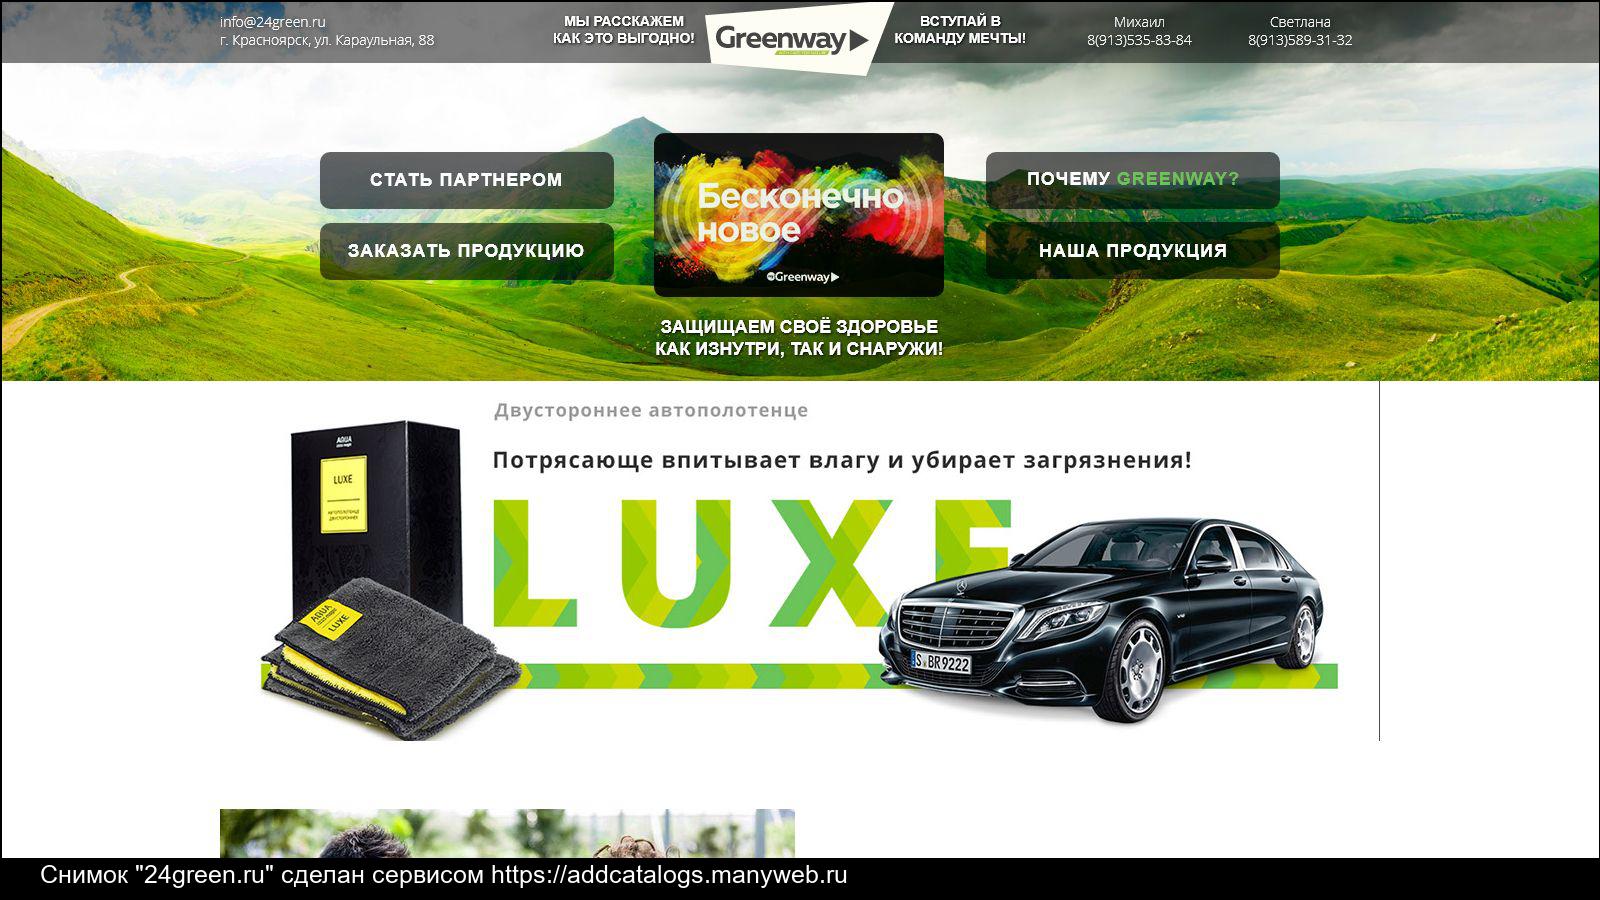 Greenway сайт каталог. Greenway бизнес. Greenway интернет магазин. Продукция Гринвей. Гринвей деньги.